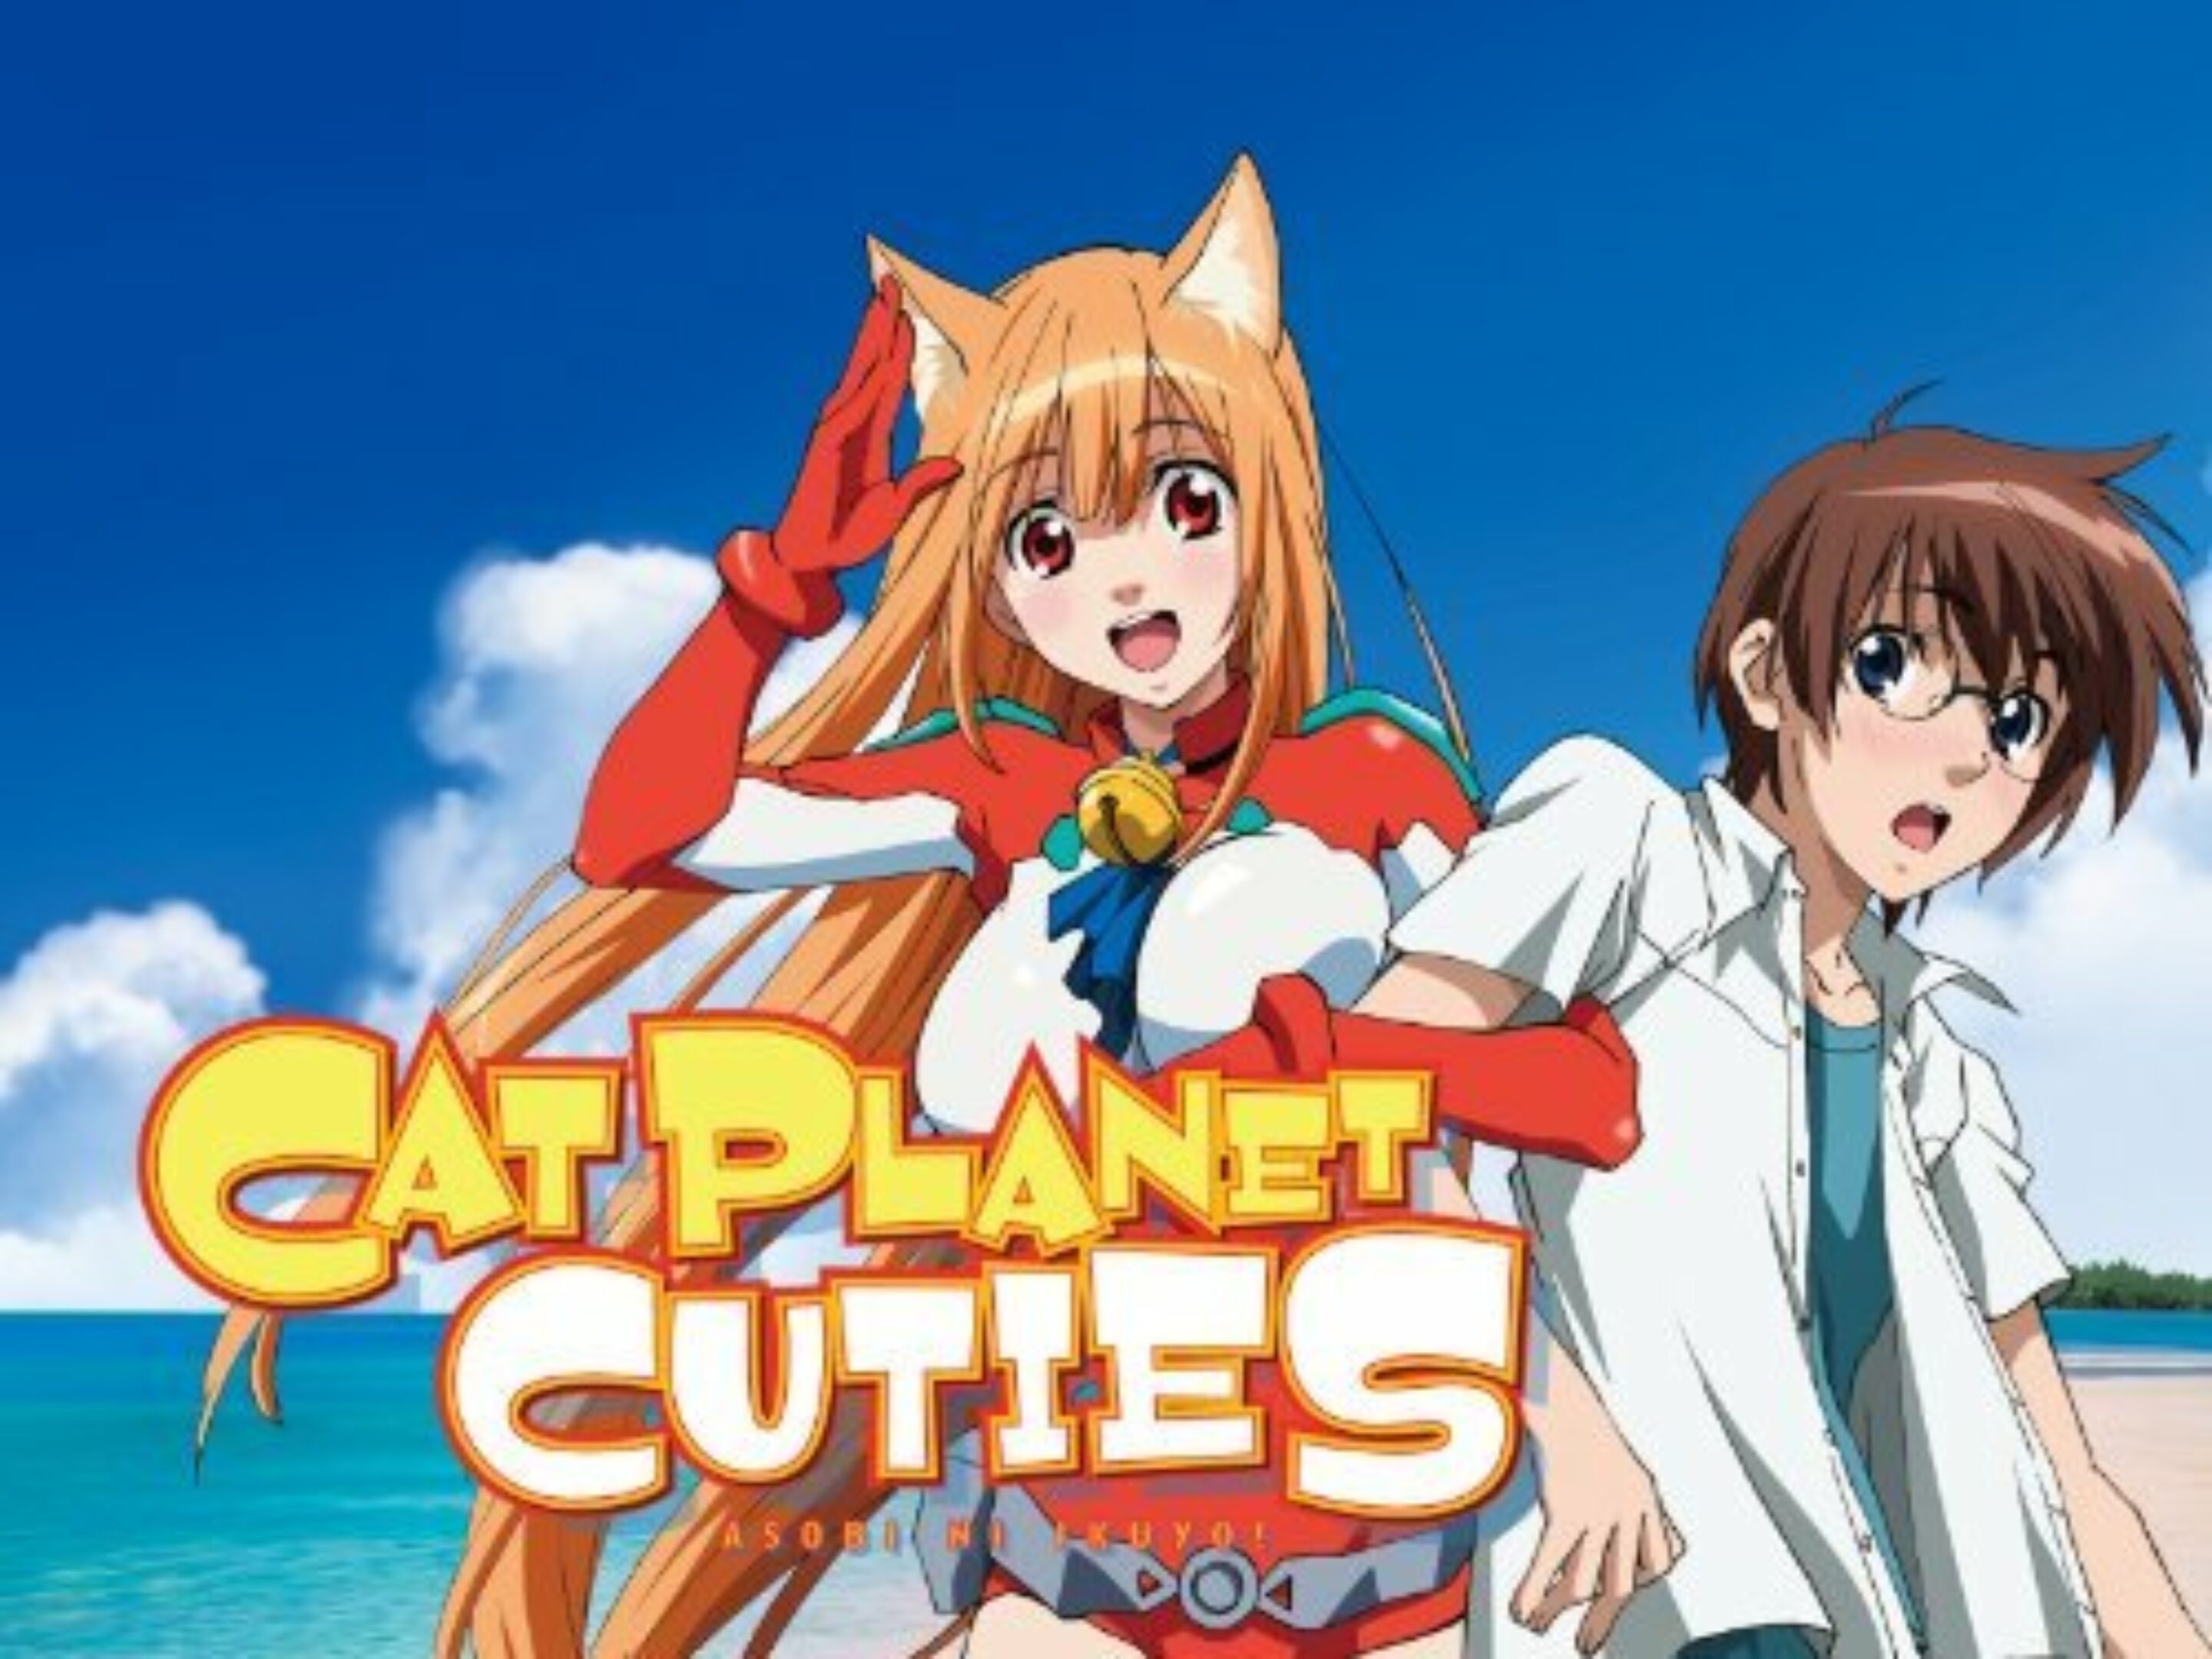 ben deremer recommends Cat Planet Cuties Episode 1